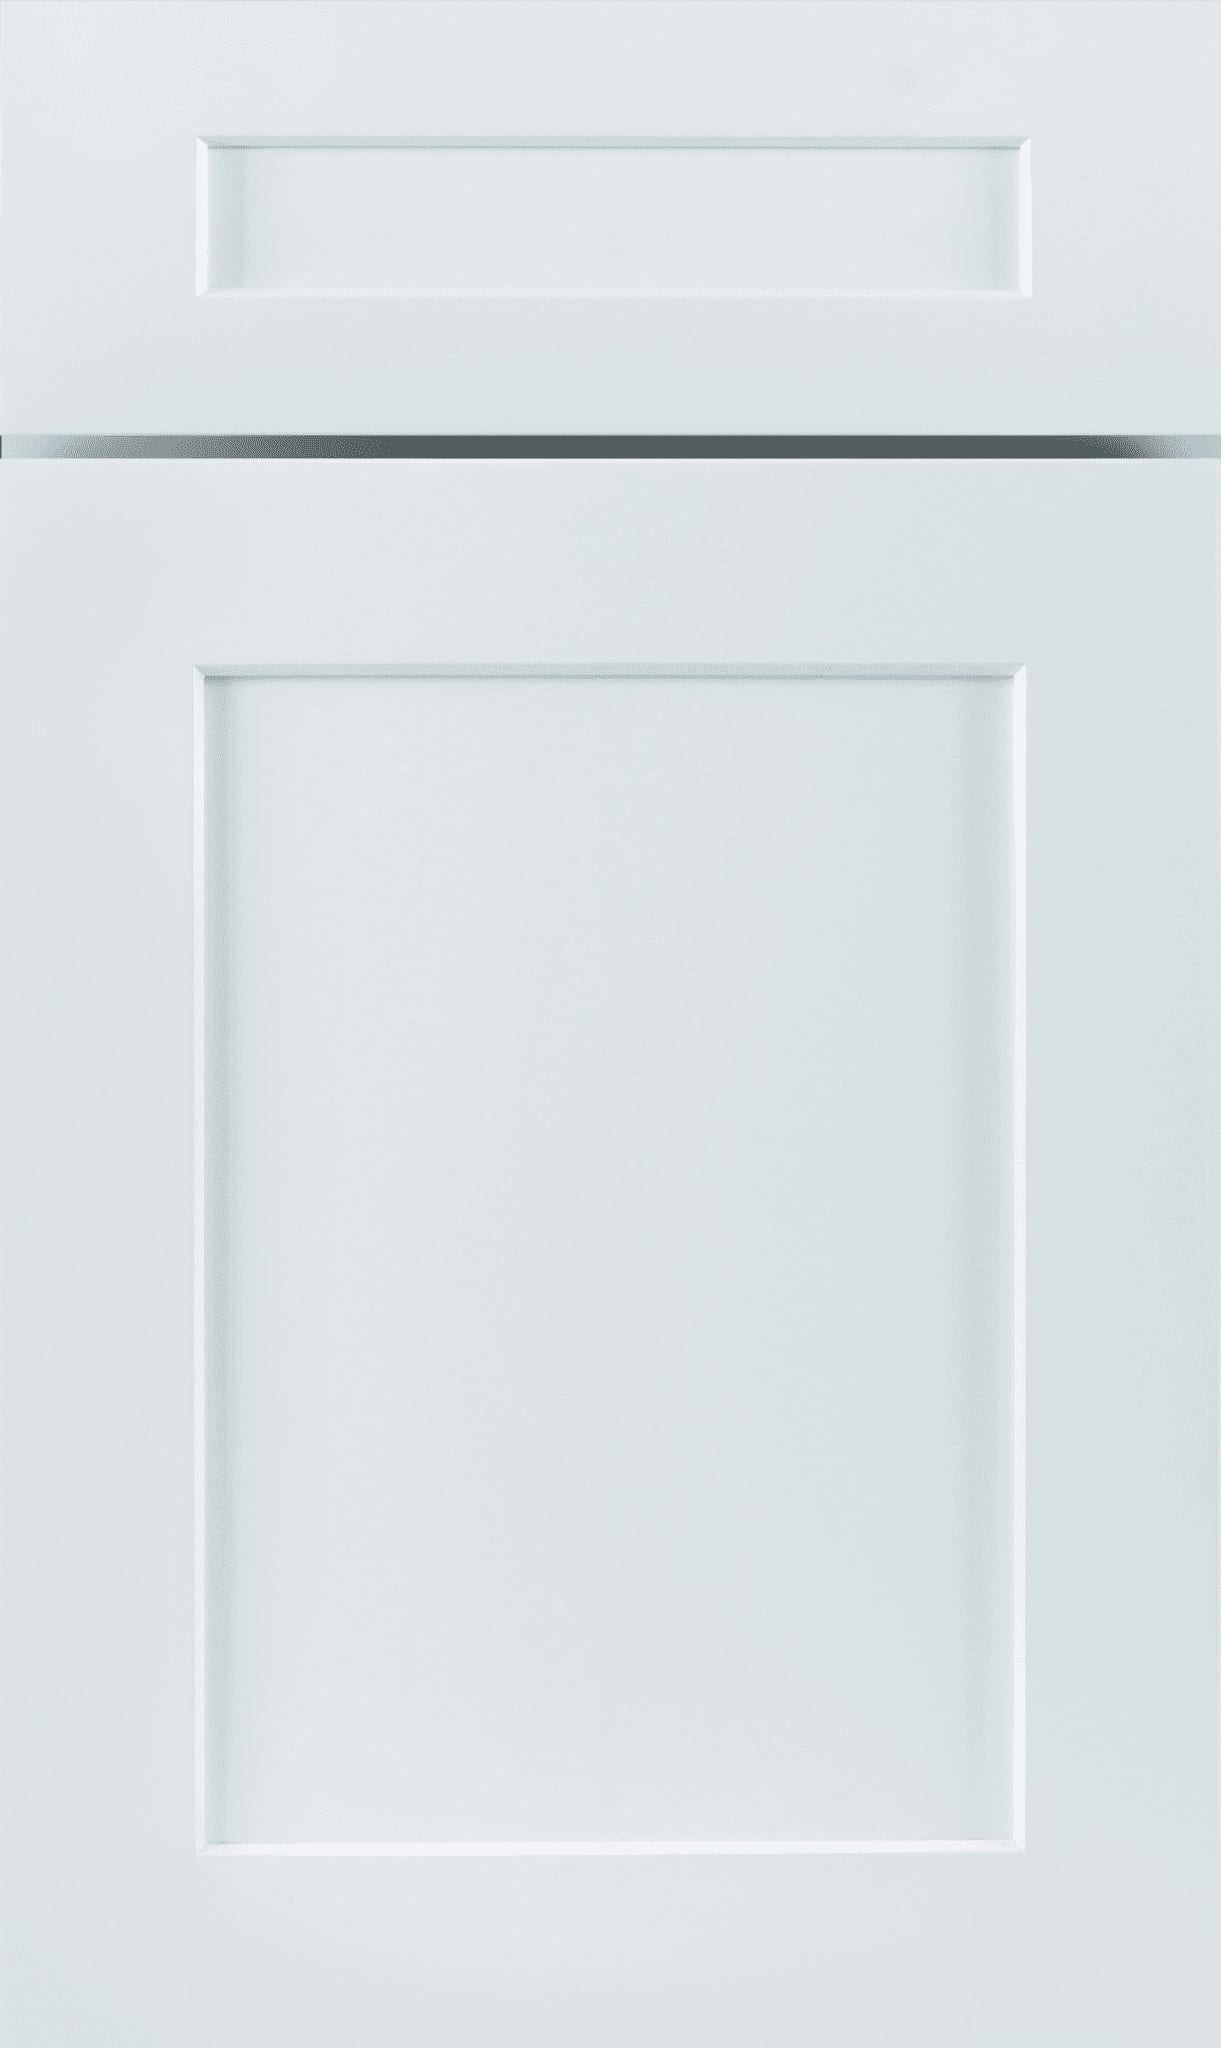 S8 White Contemporary Cabinet Door